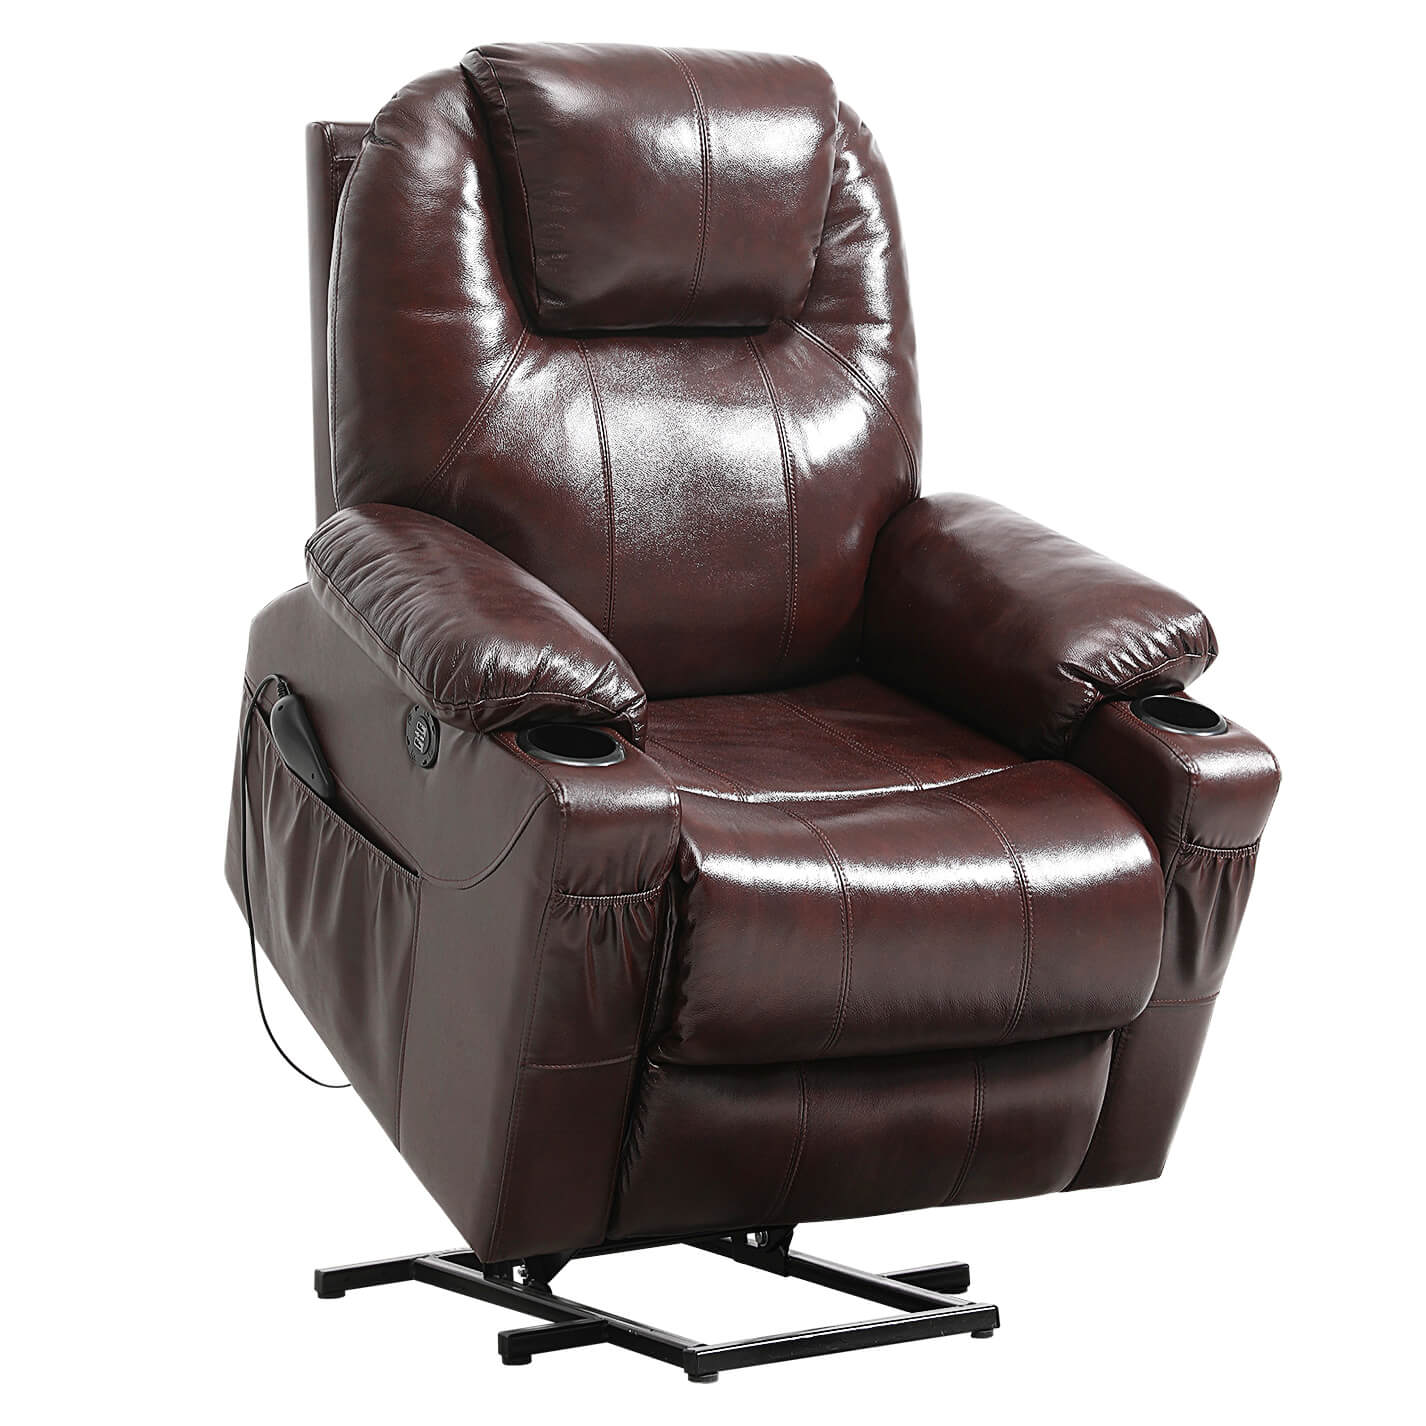 HOMESTOCK Black Deluxe Adjustable Power Lift Recliner Chair for